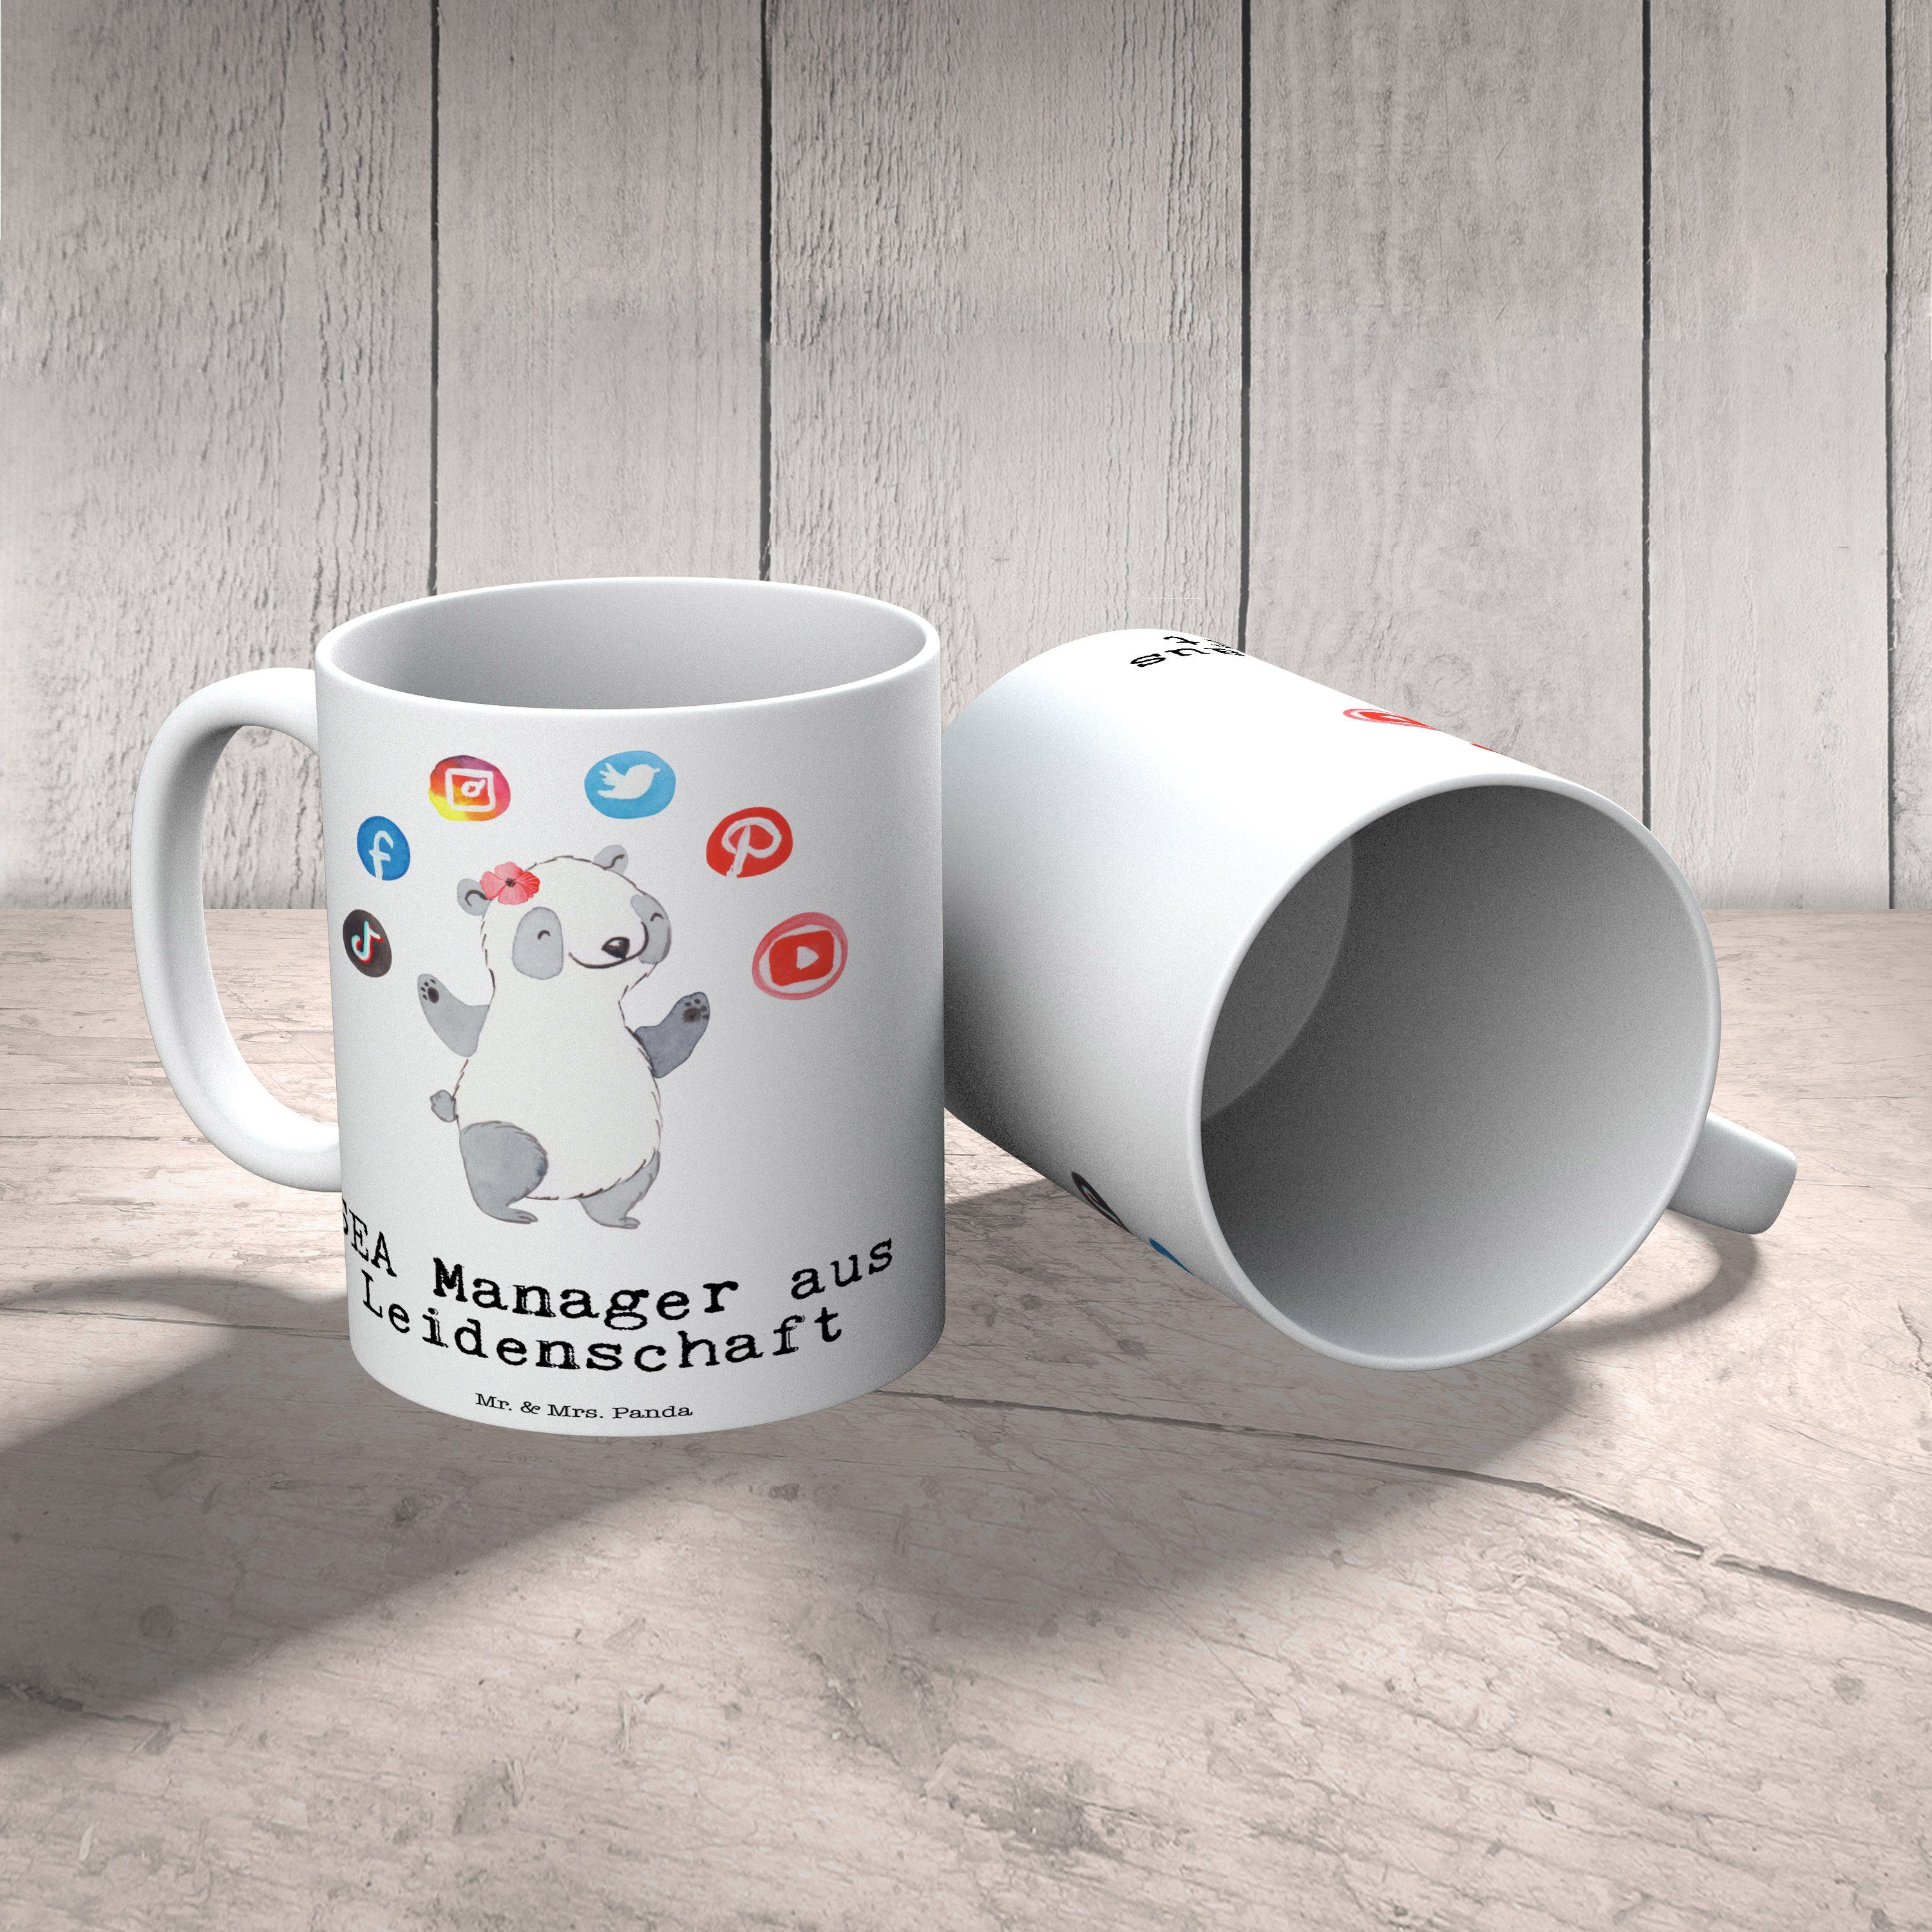 Mrs. Geschenk & - Manager Leidenschaft Weiß Mr. - SEA Tasse, Kaffe, aus Panda Tasse Geschenk, Keramik